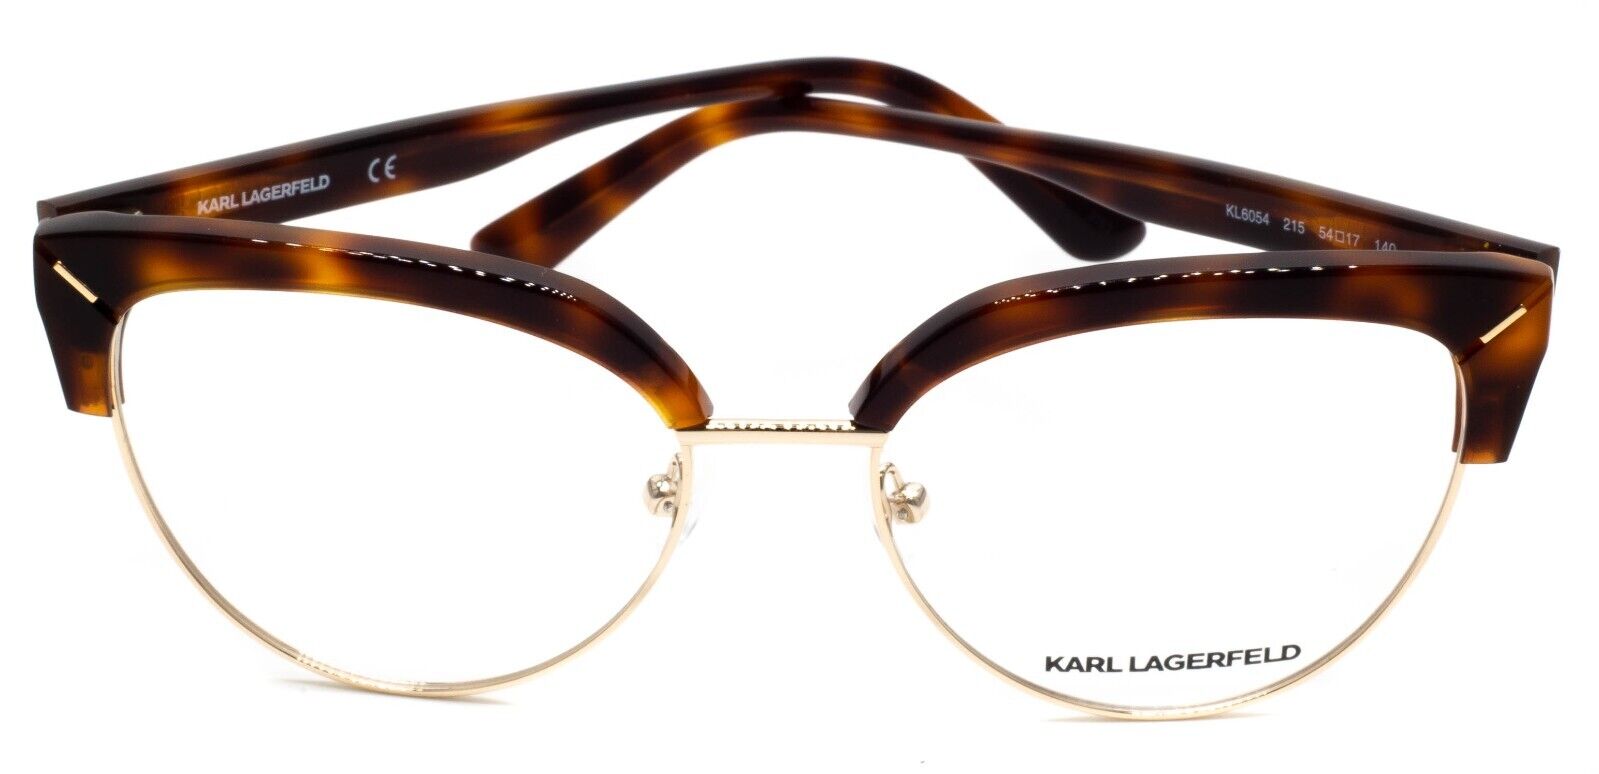 KARL LAGERFELD KL6054 215 54mm Eyewear FRAMES RX Optical Eyeglasses Glasses  New - GGV Eyewear